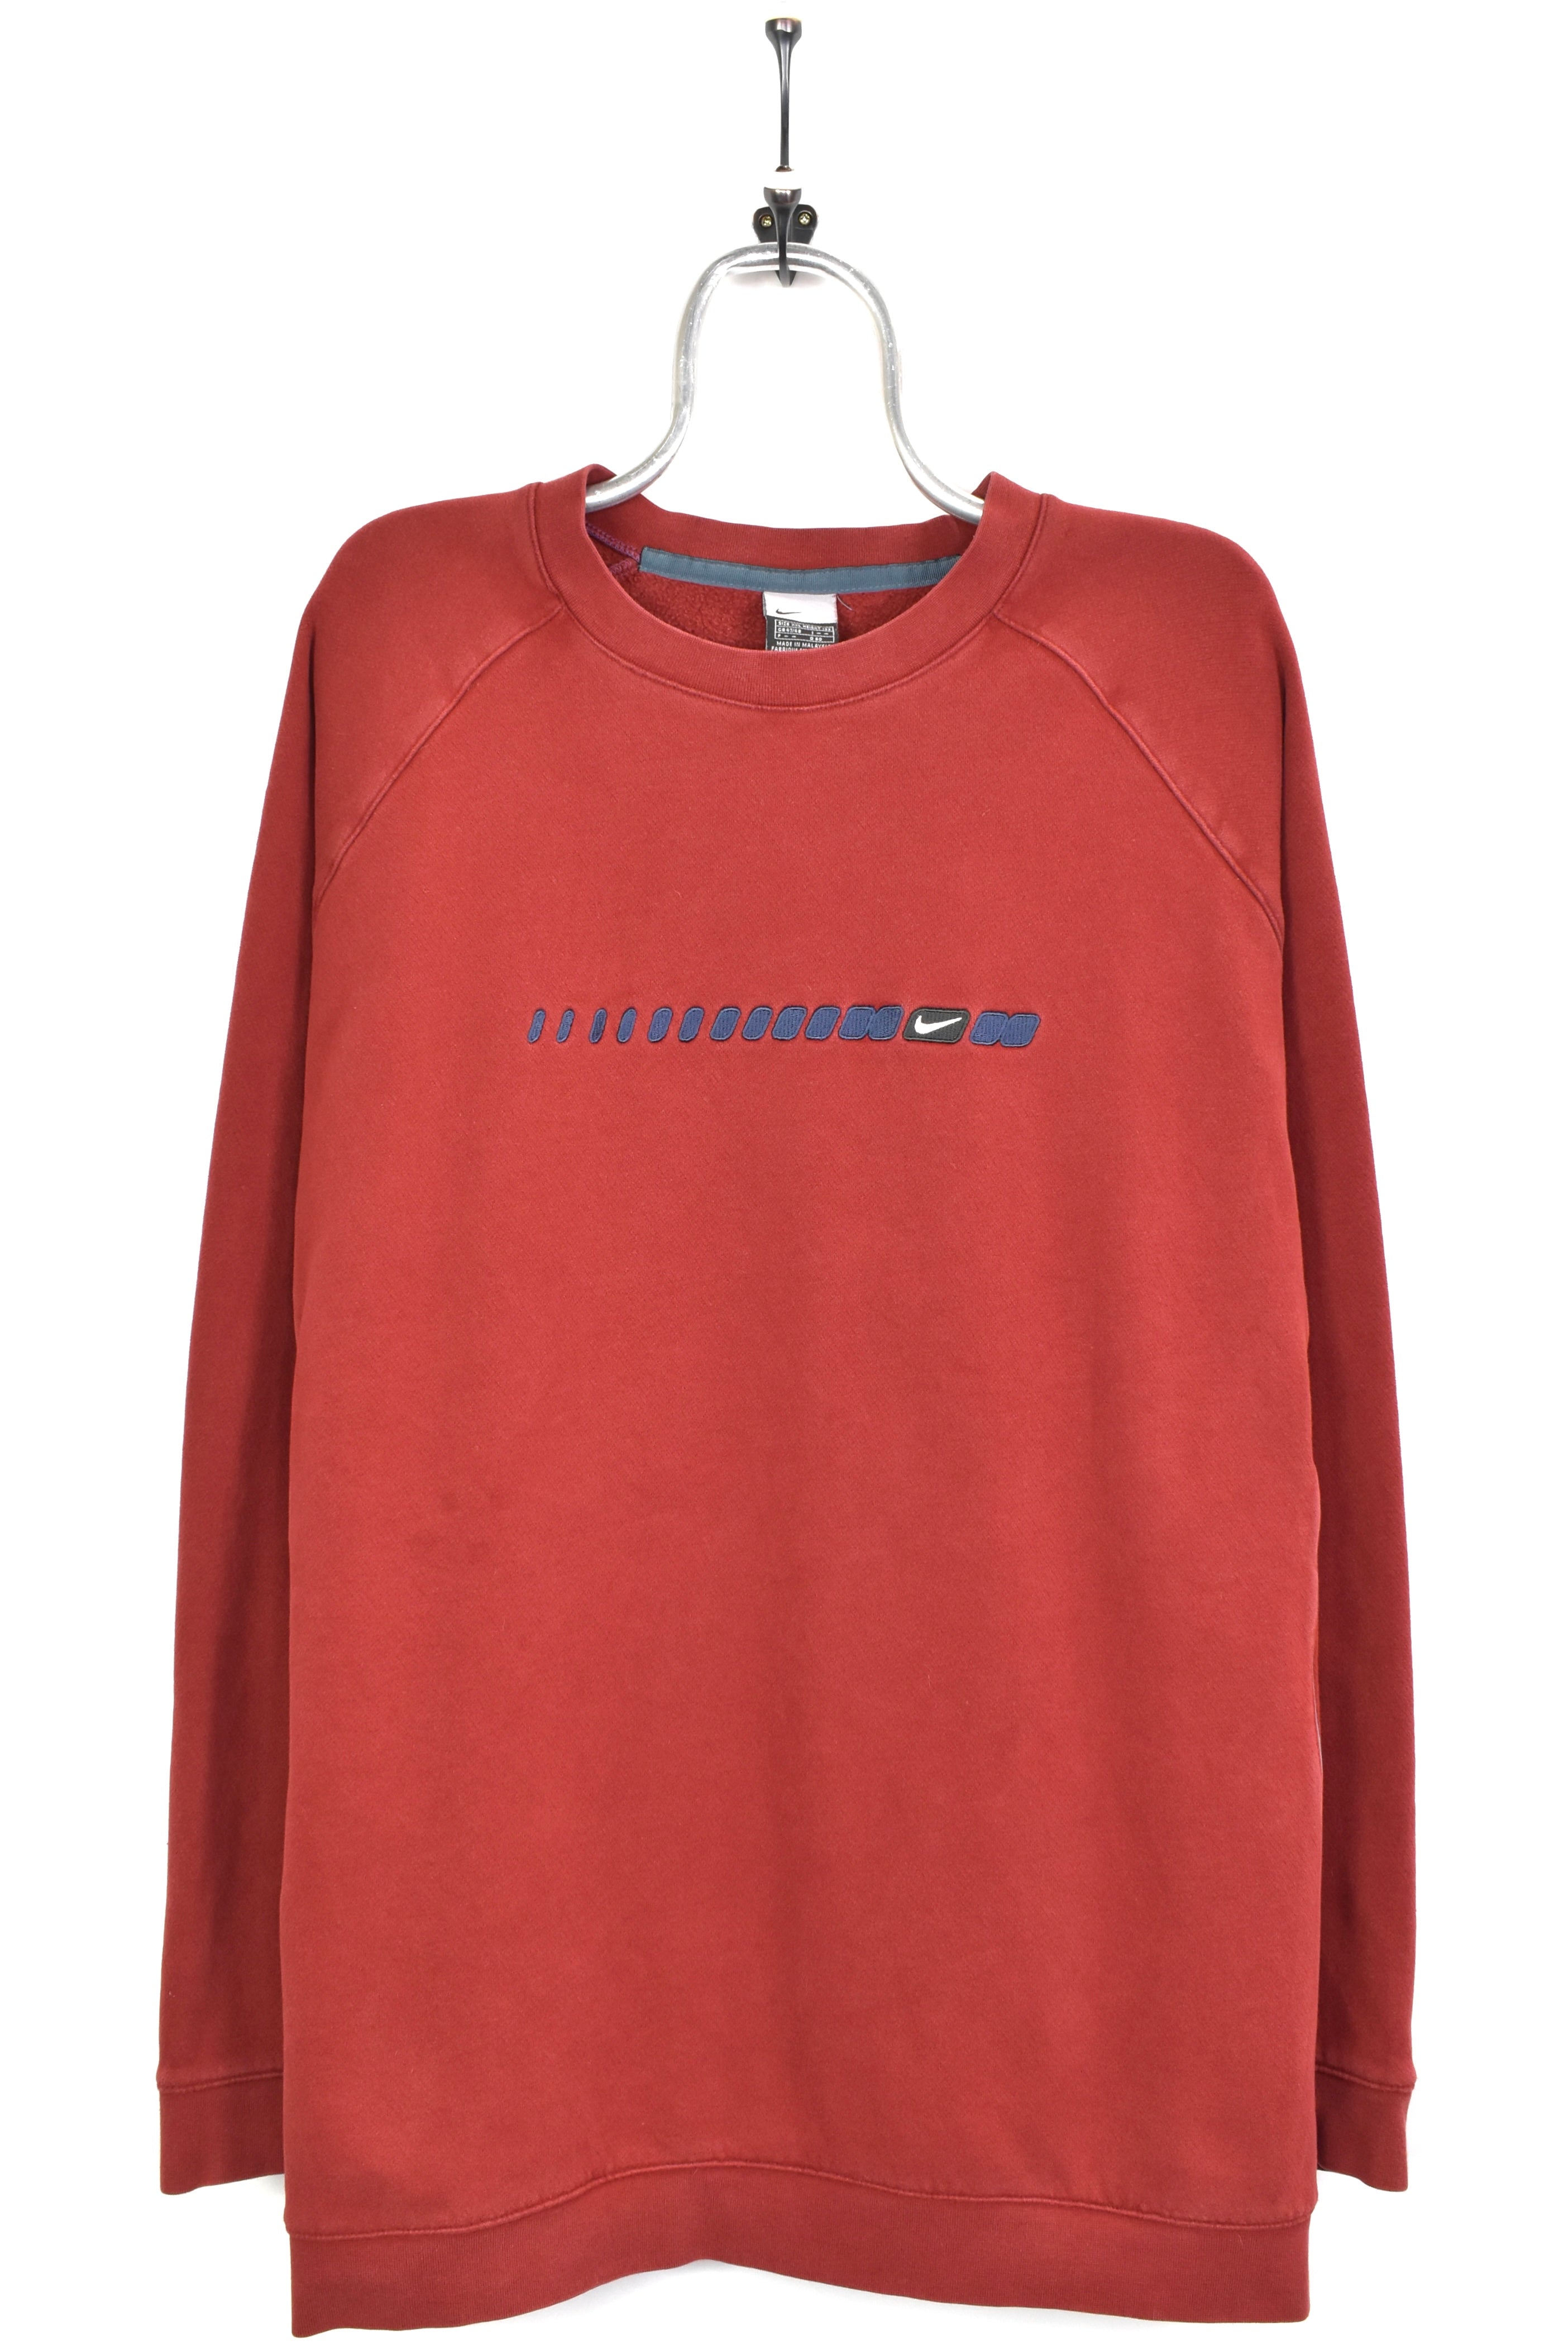 Vintage Nike sweatshirt, embroidered crewneck - XXL, burgundy NIKE